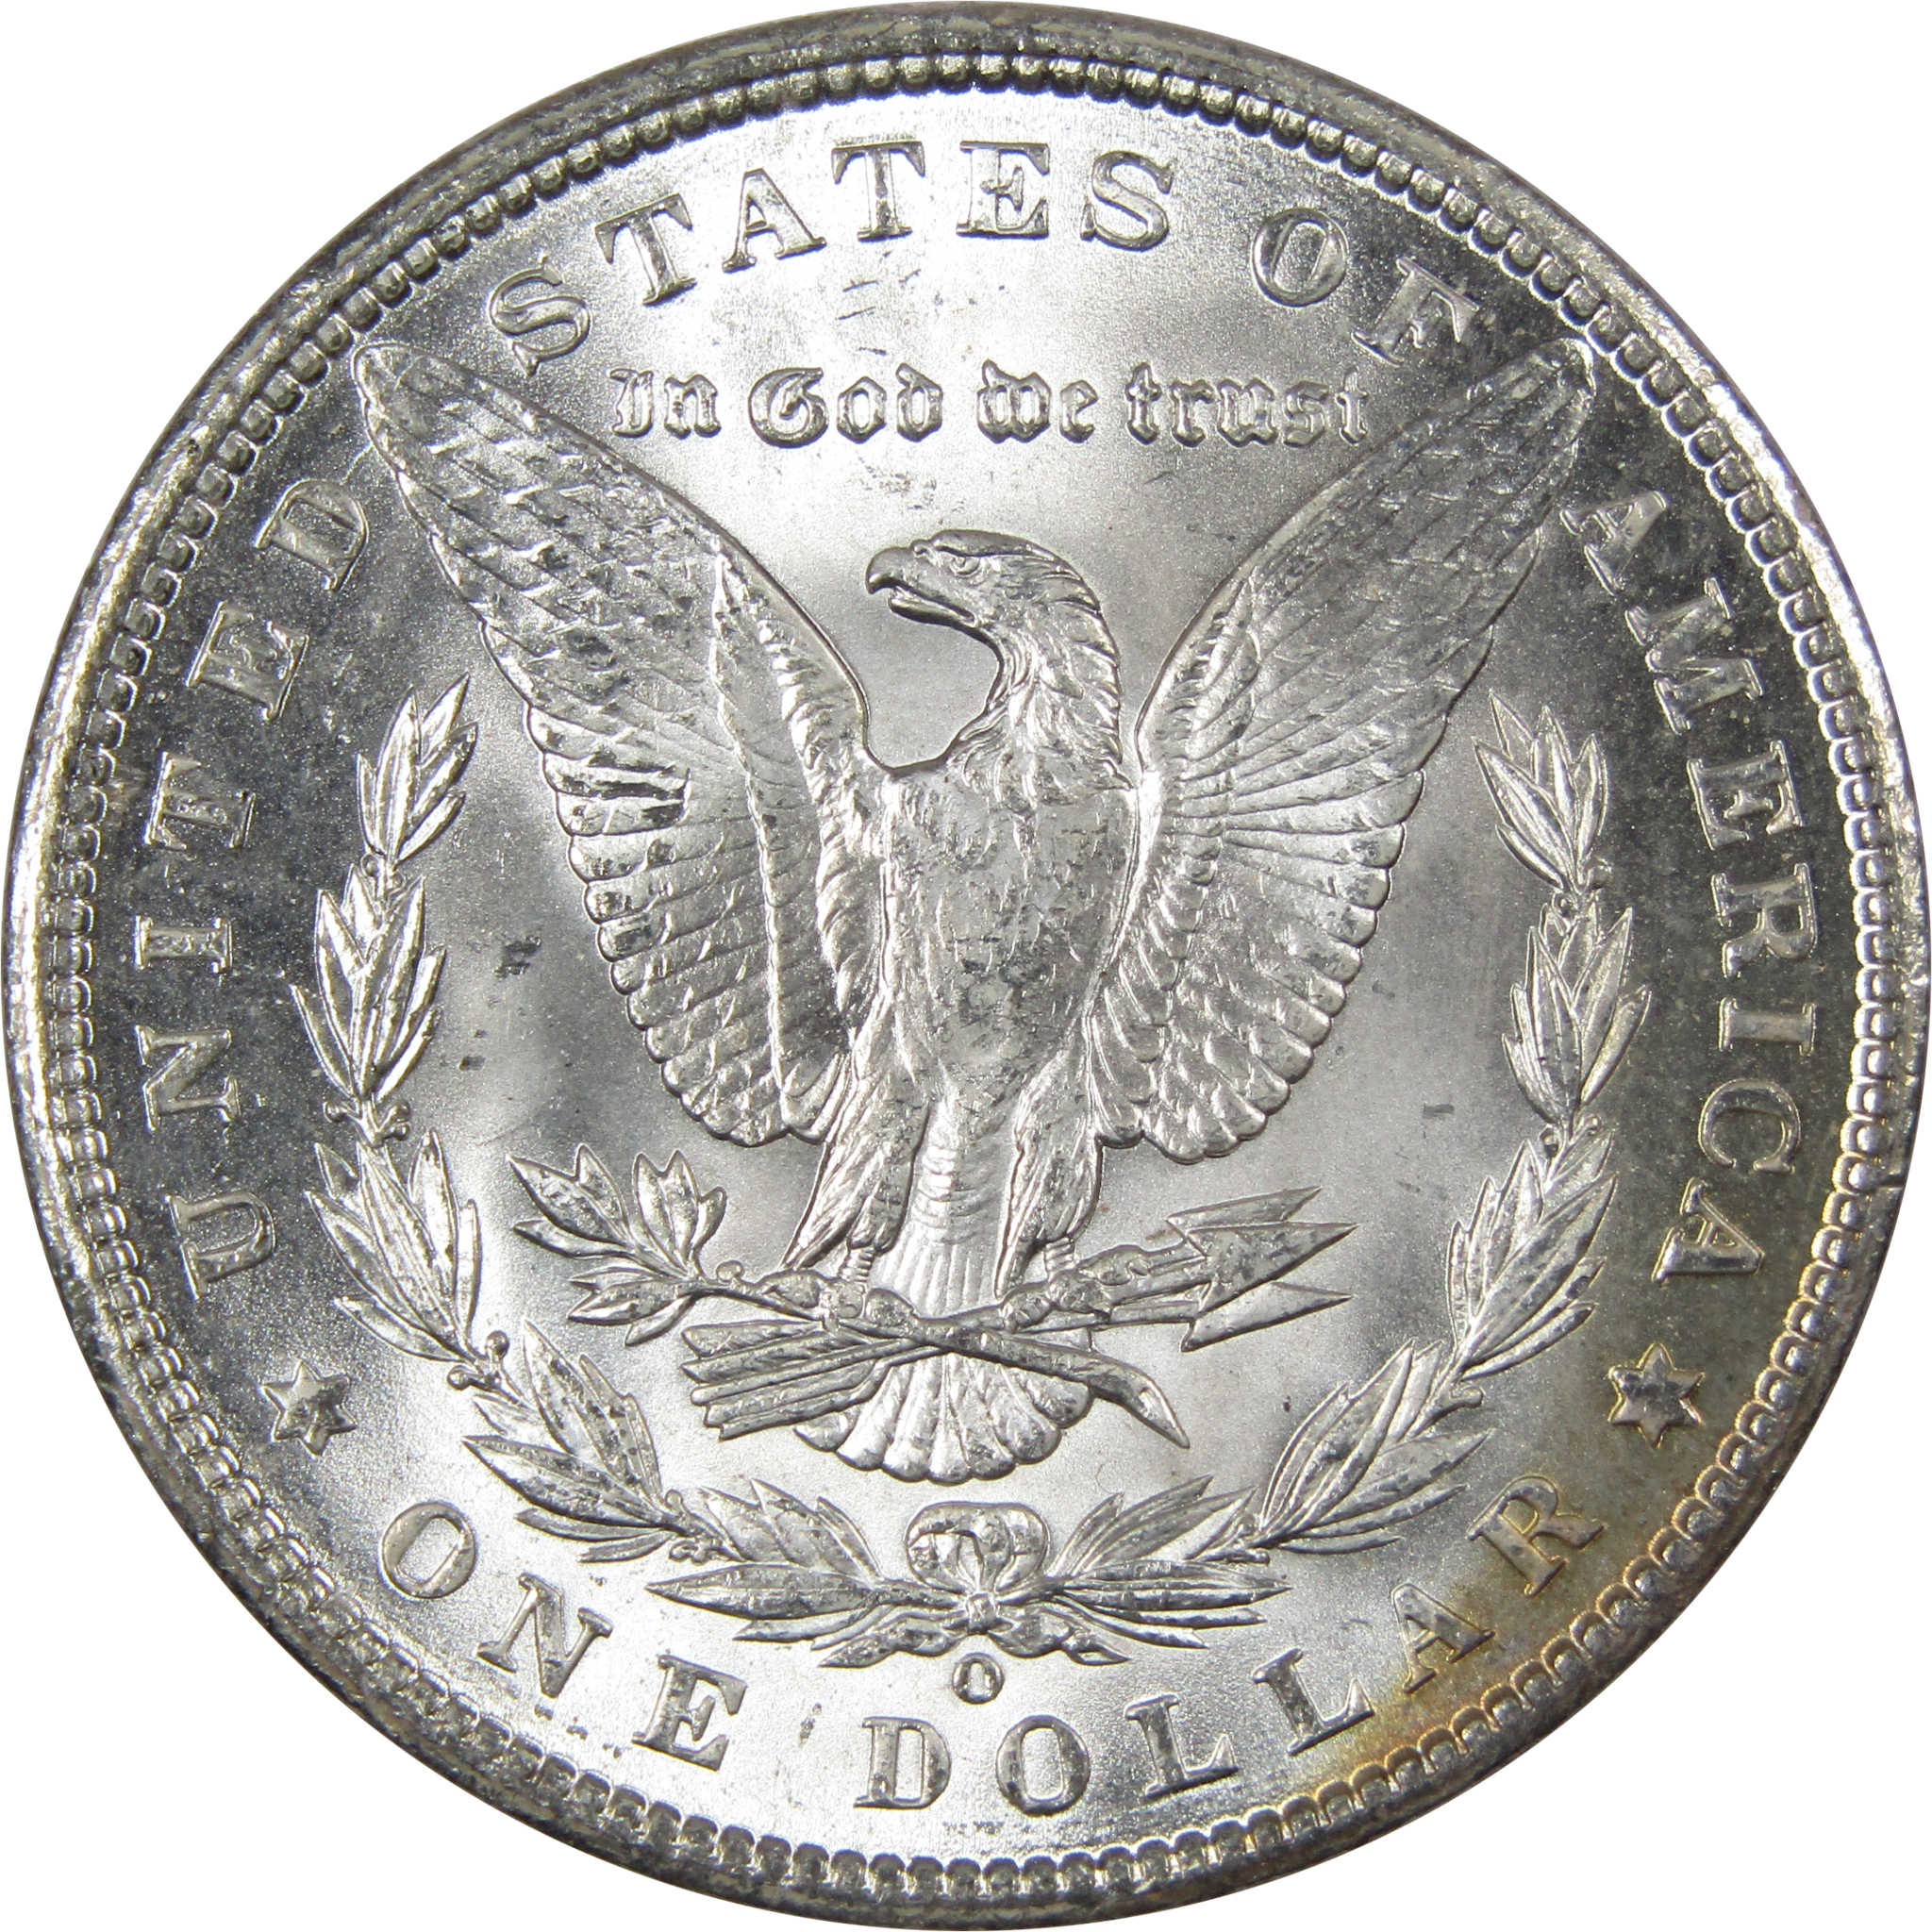 1900 O Morgan Dollar BU Uncirculated Mint State 90% Silver SKU:IPC9763 - Morgan coin - Morgan silver dollar - Morgan silver dollar for sale - Profile Coins &amp; Collectibles